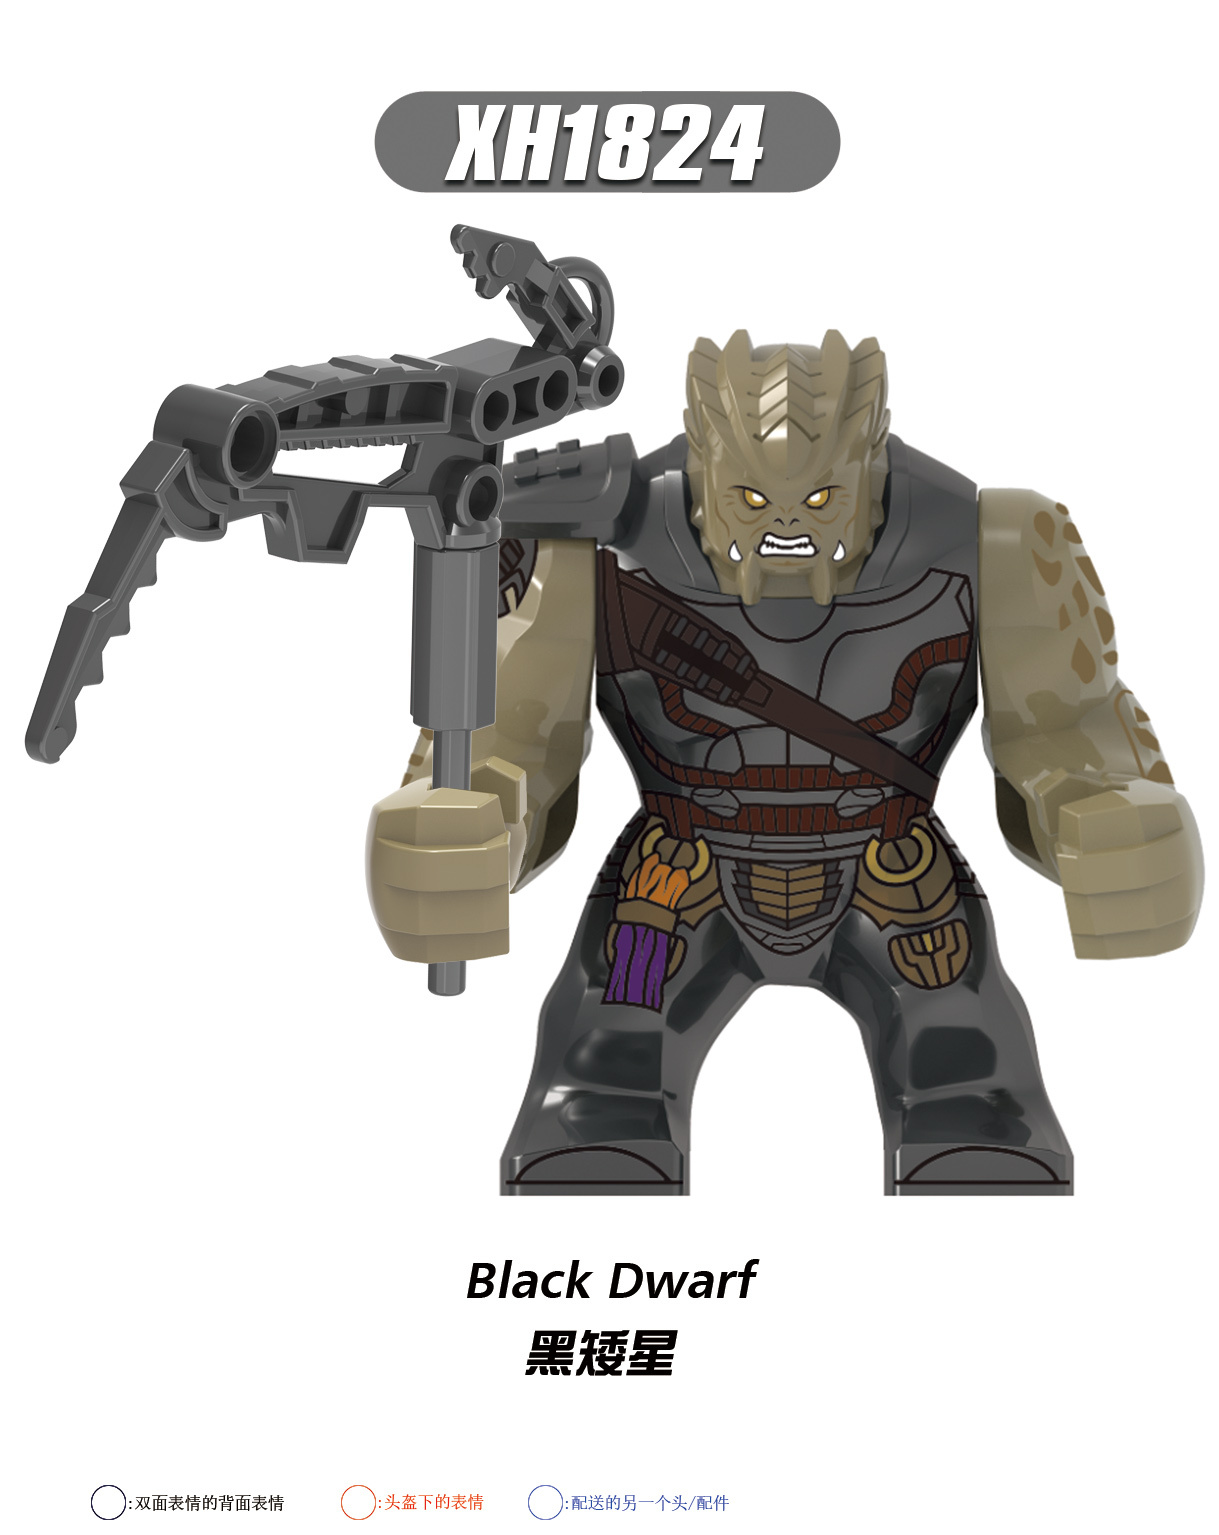 XH1824 XH1825 Super Hero Series Black Dwarf Darkseid Building Blocks Bricks Airborn Strooper Action Figures Educational Toys For Kids Gifts